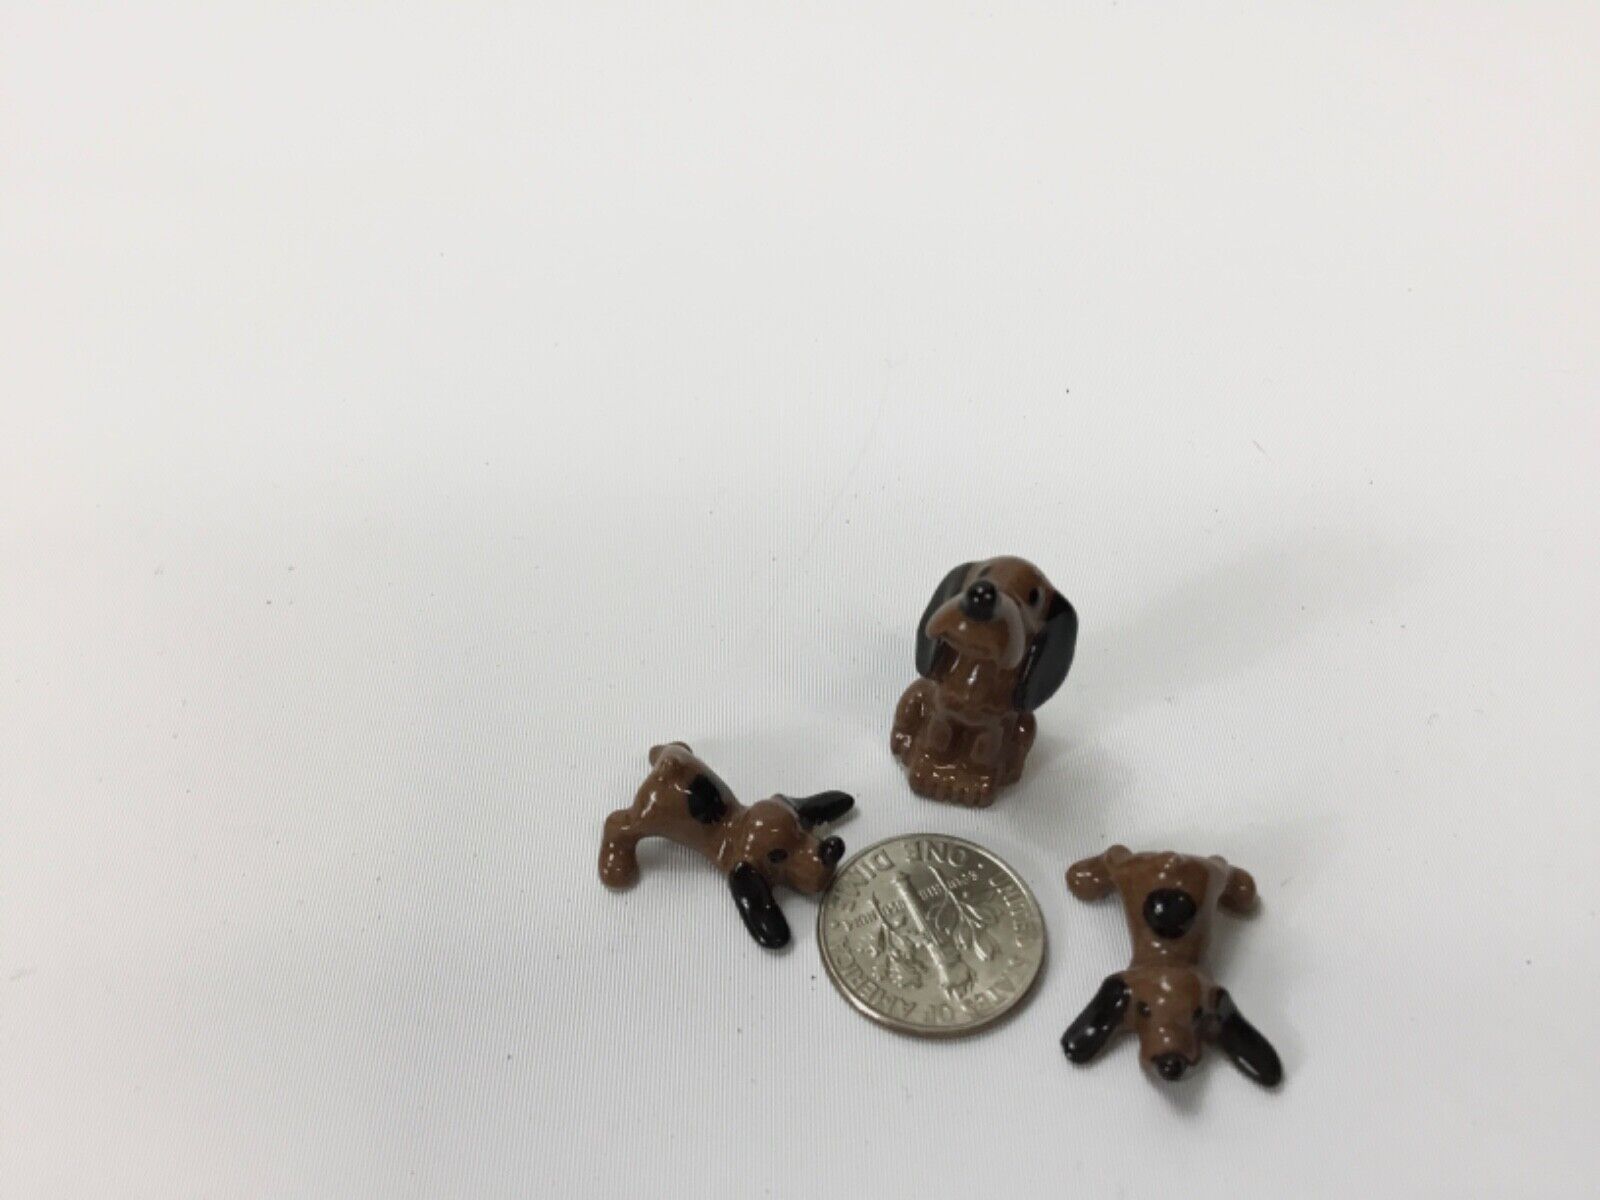 3 Miniature Porcelain Dog Figurines. (2) 3/4” Long (1) 1” Tall Hound Dogs